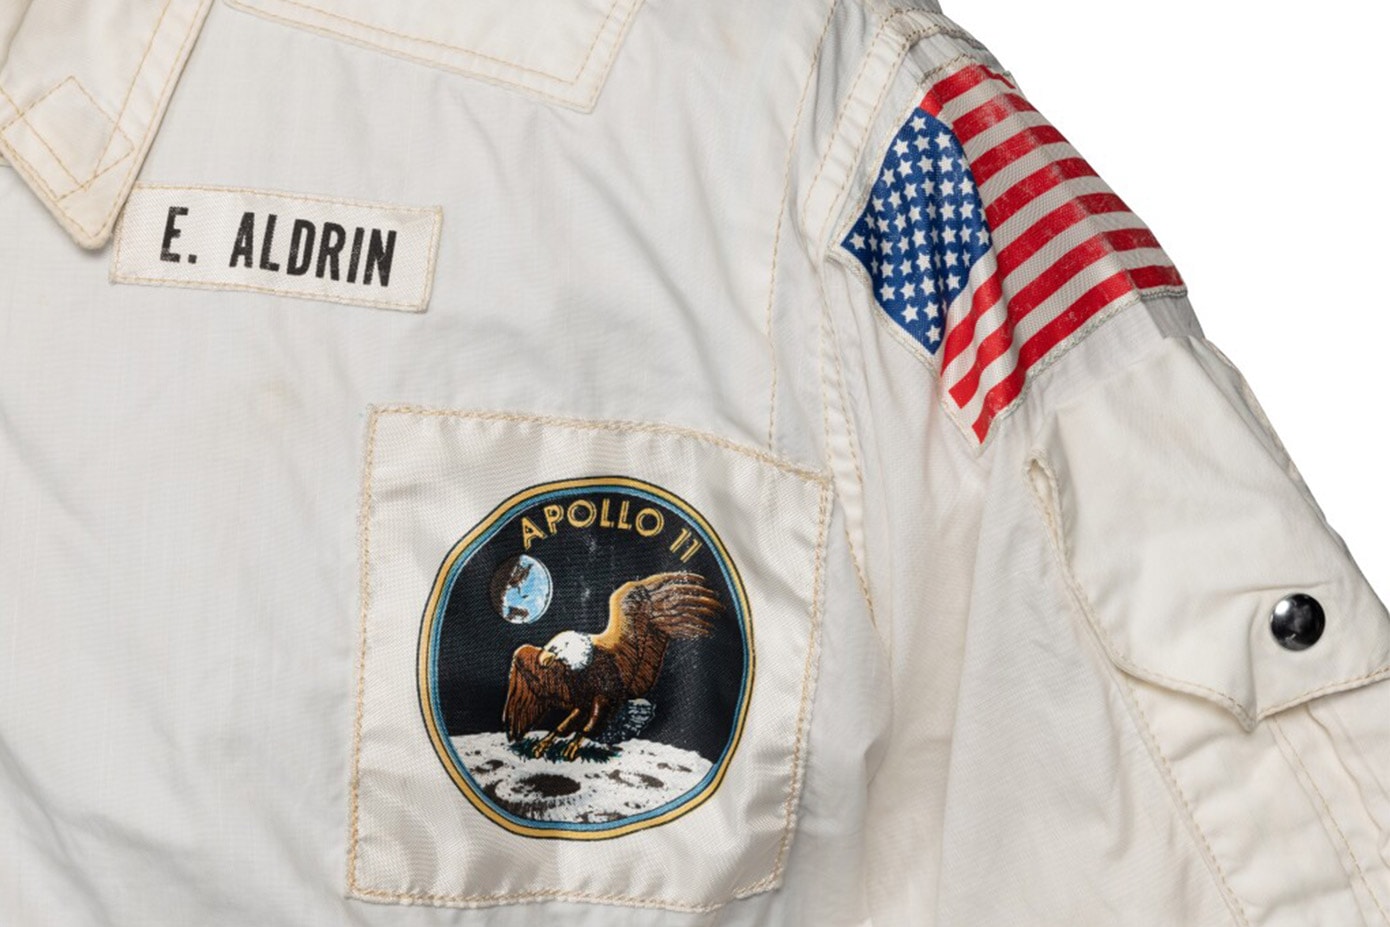 Sotheby's auction Buzz Aldrin Apollo 11 inflight coverall jacket $2.8 million usd auction sale 